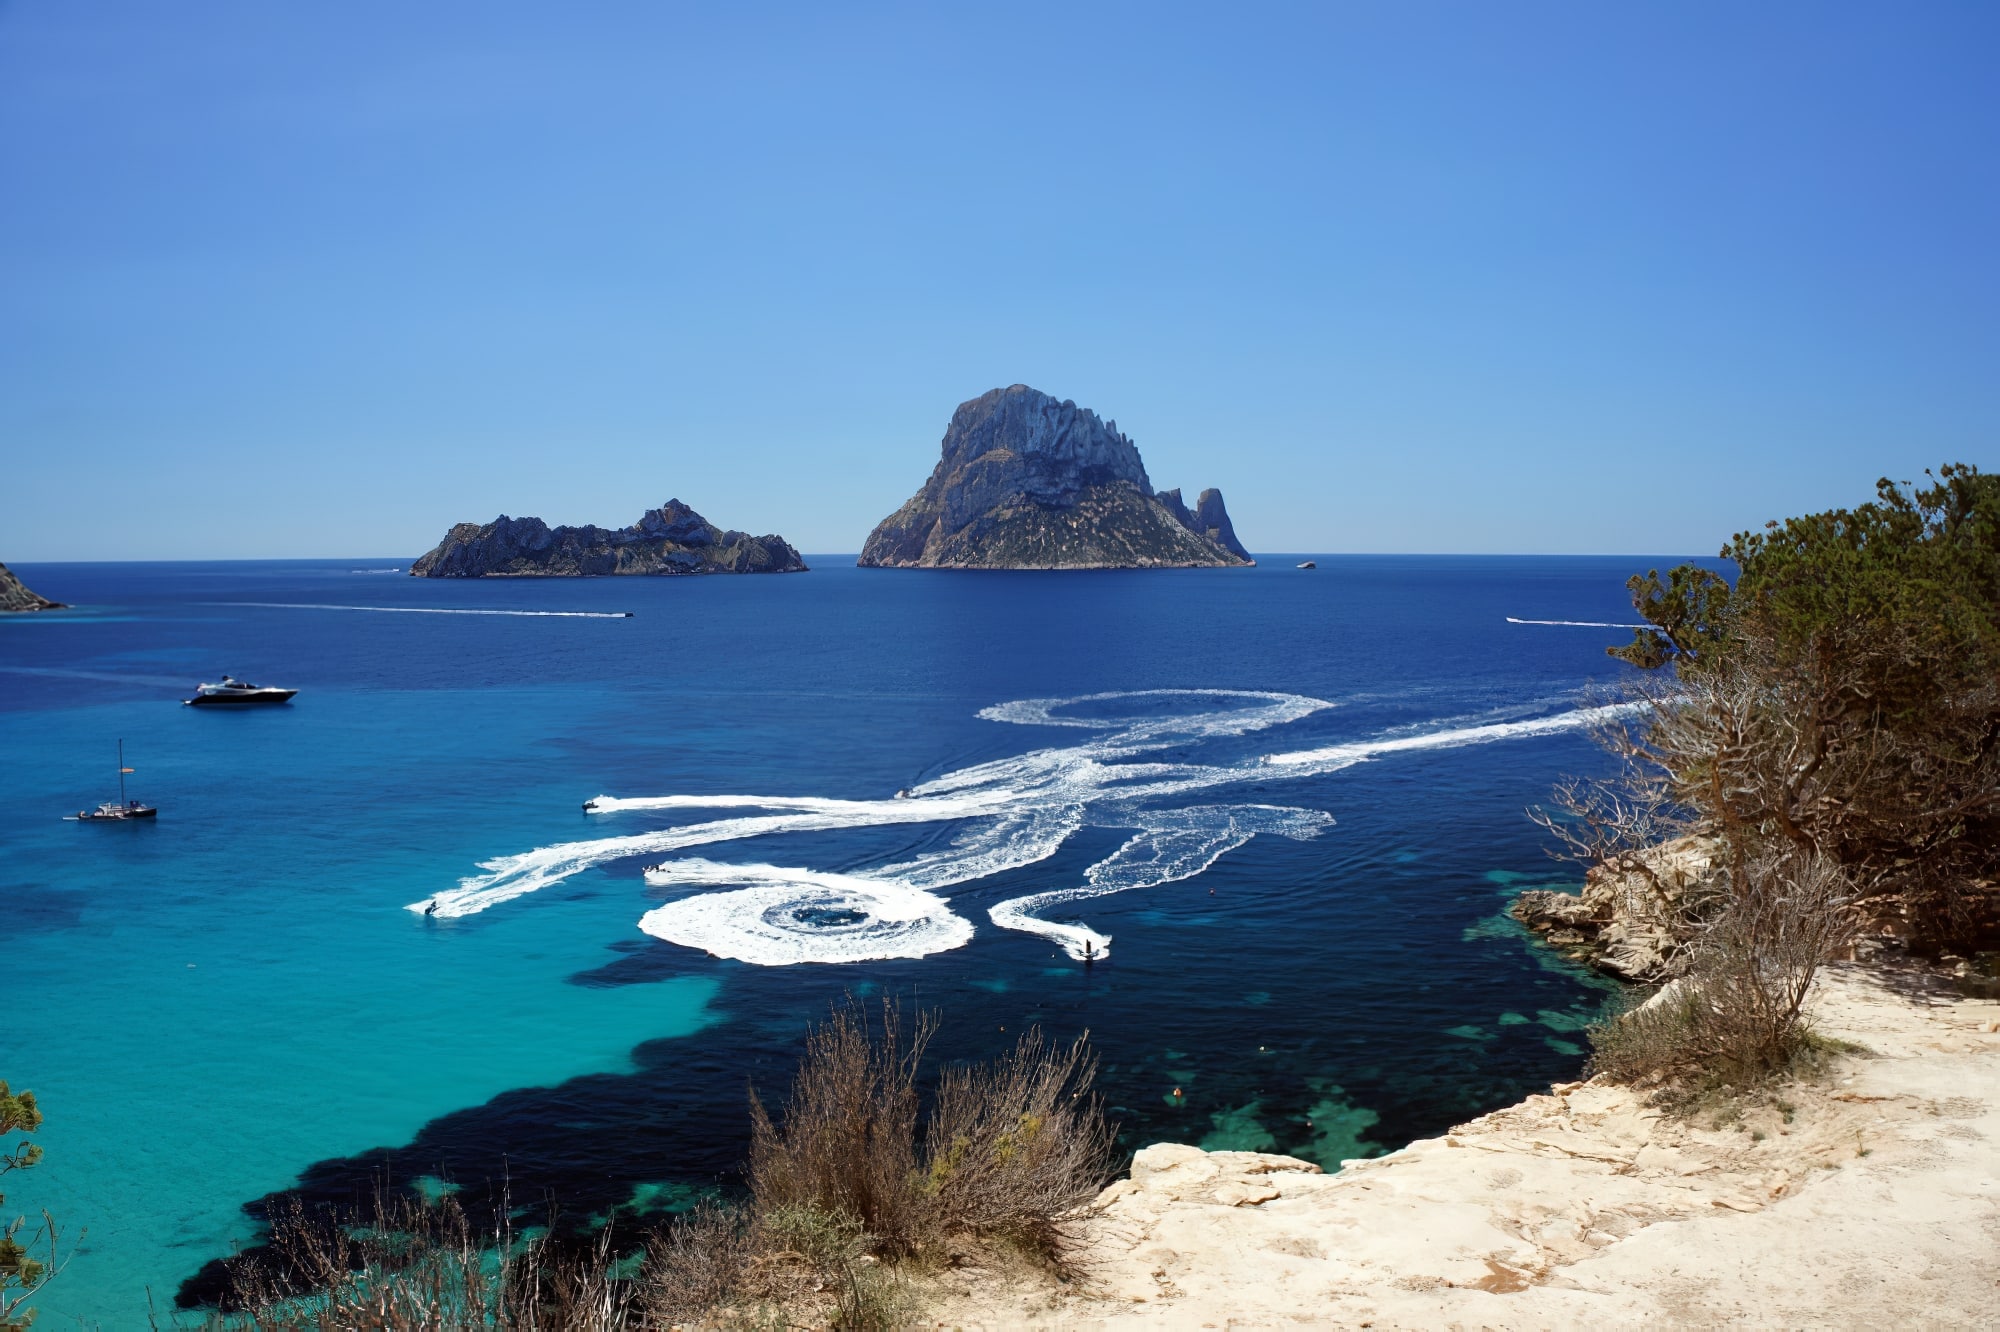 Activités outdoor à Ibiza : jet ski